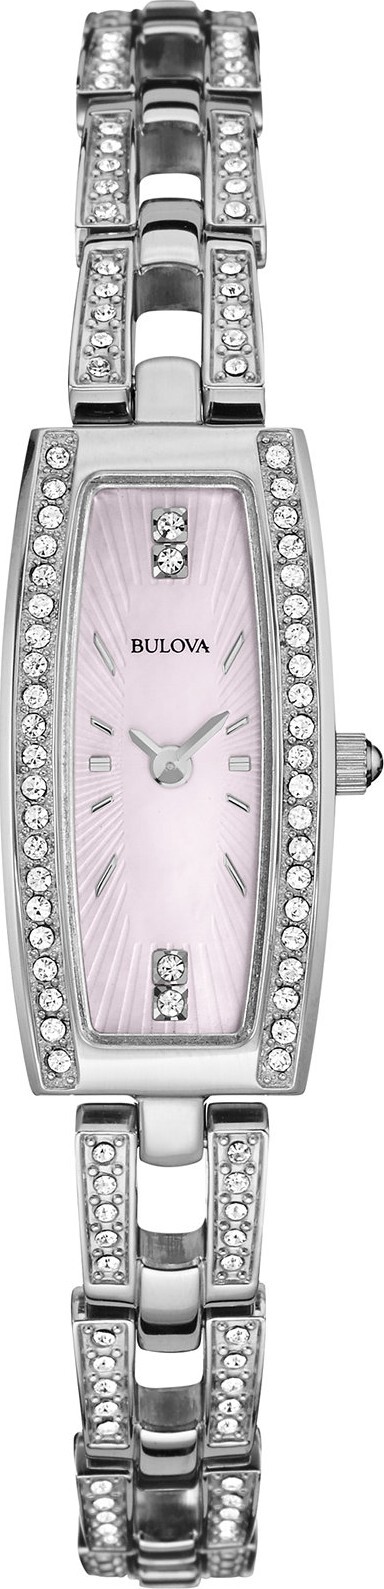 Đồng hồ nữ Bulova 96L208